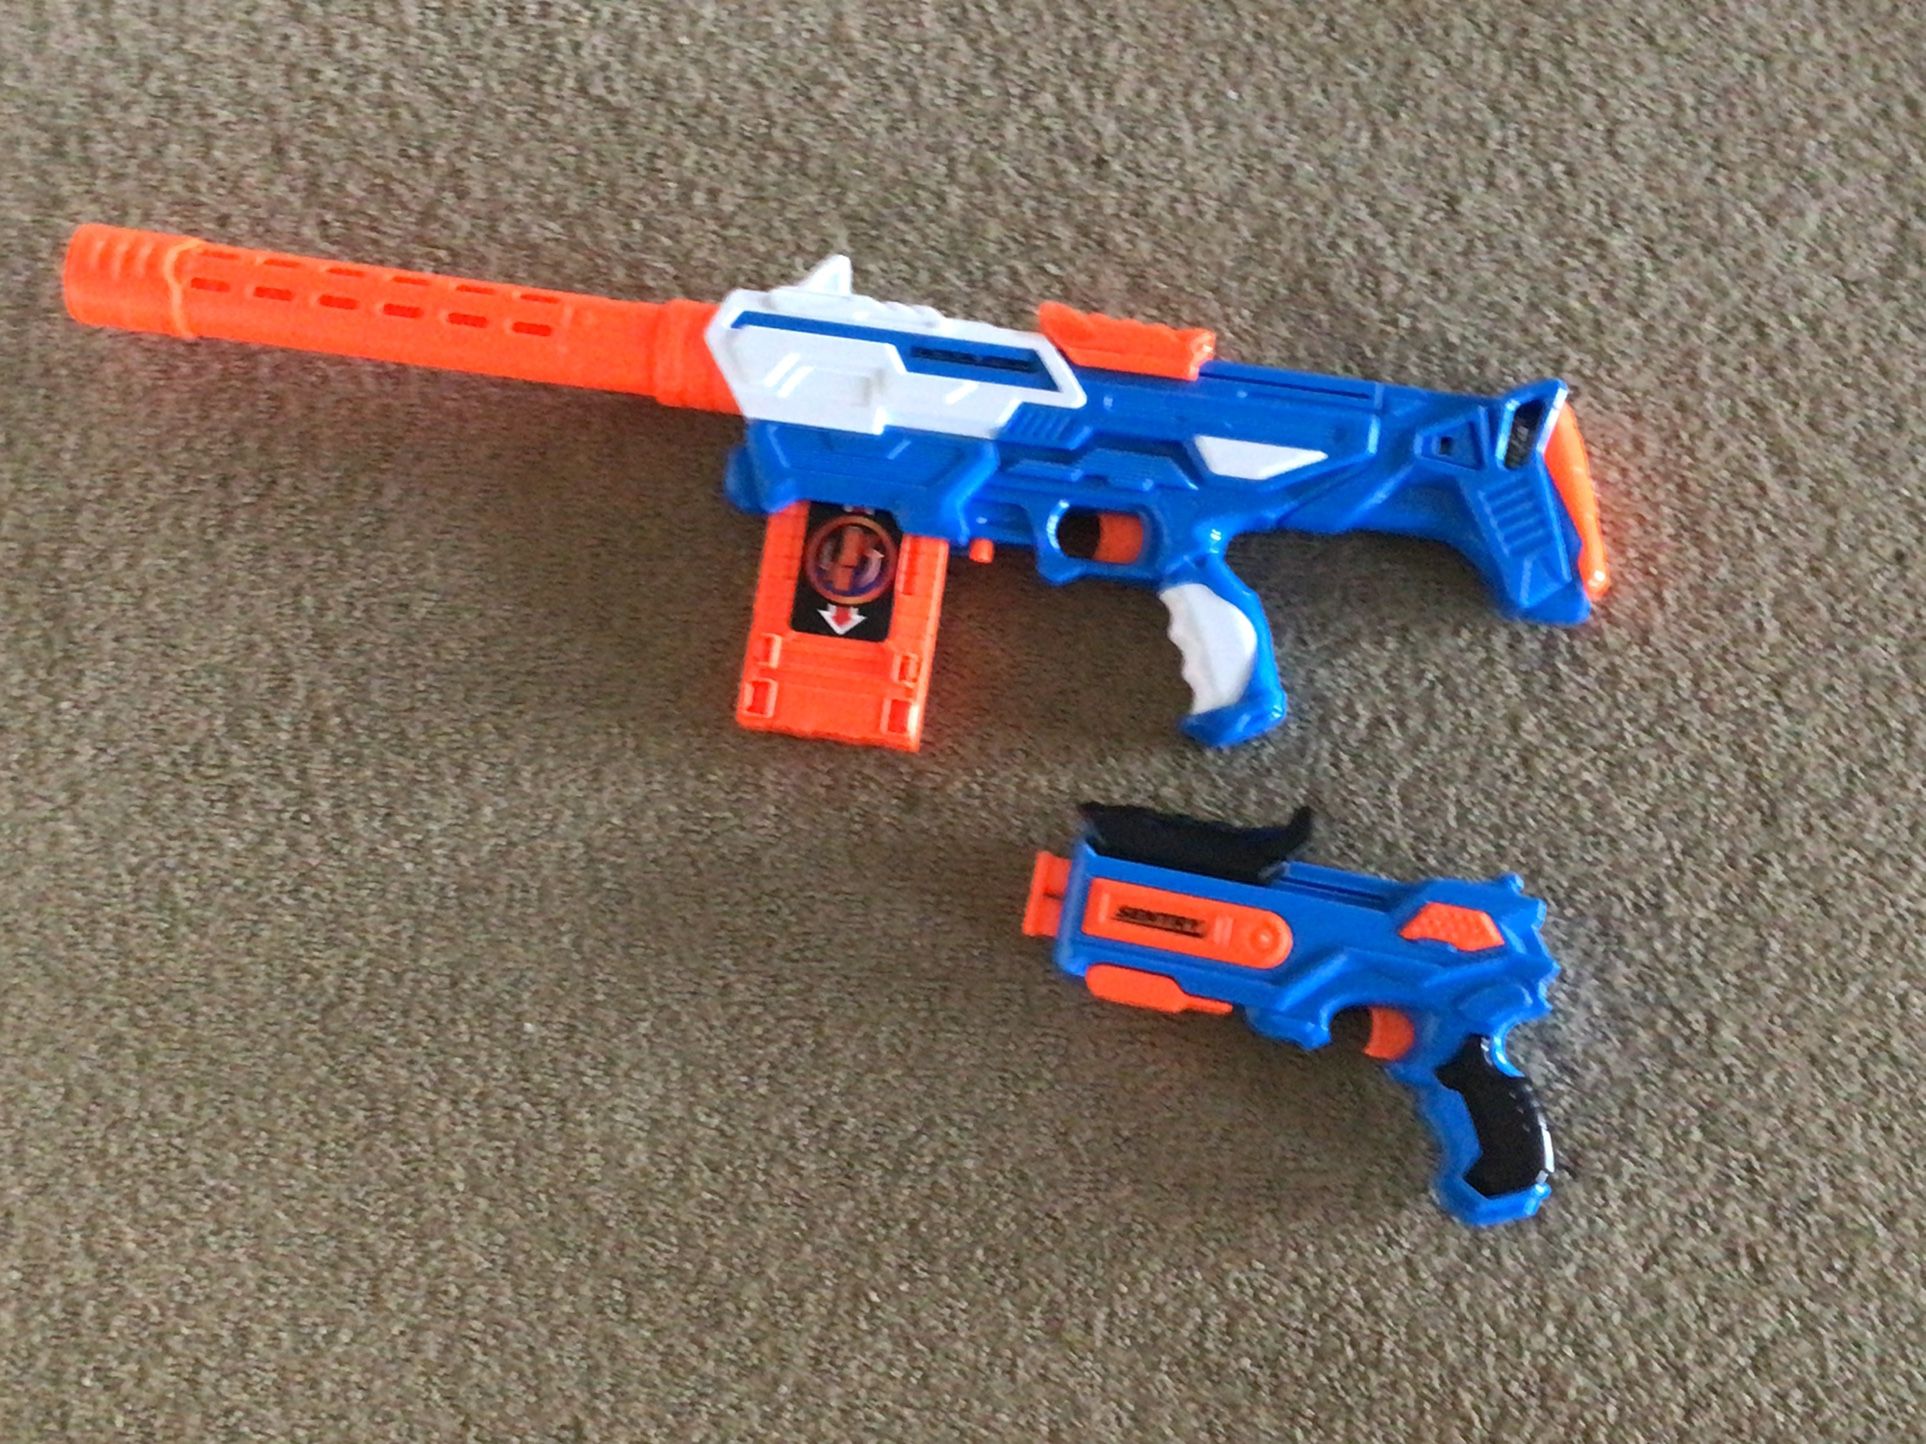 Tactical storm Nerf gun and sentry pistol.